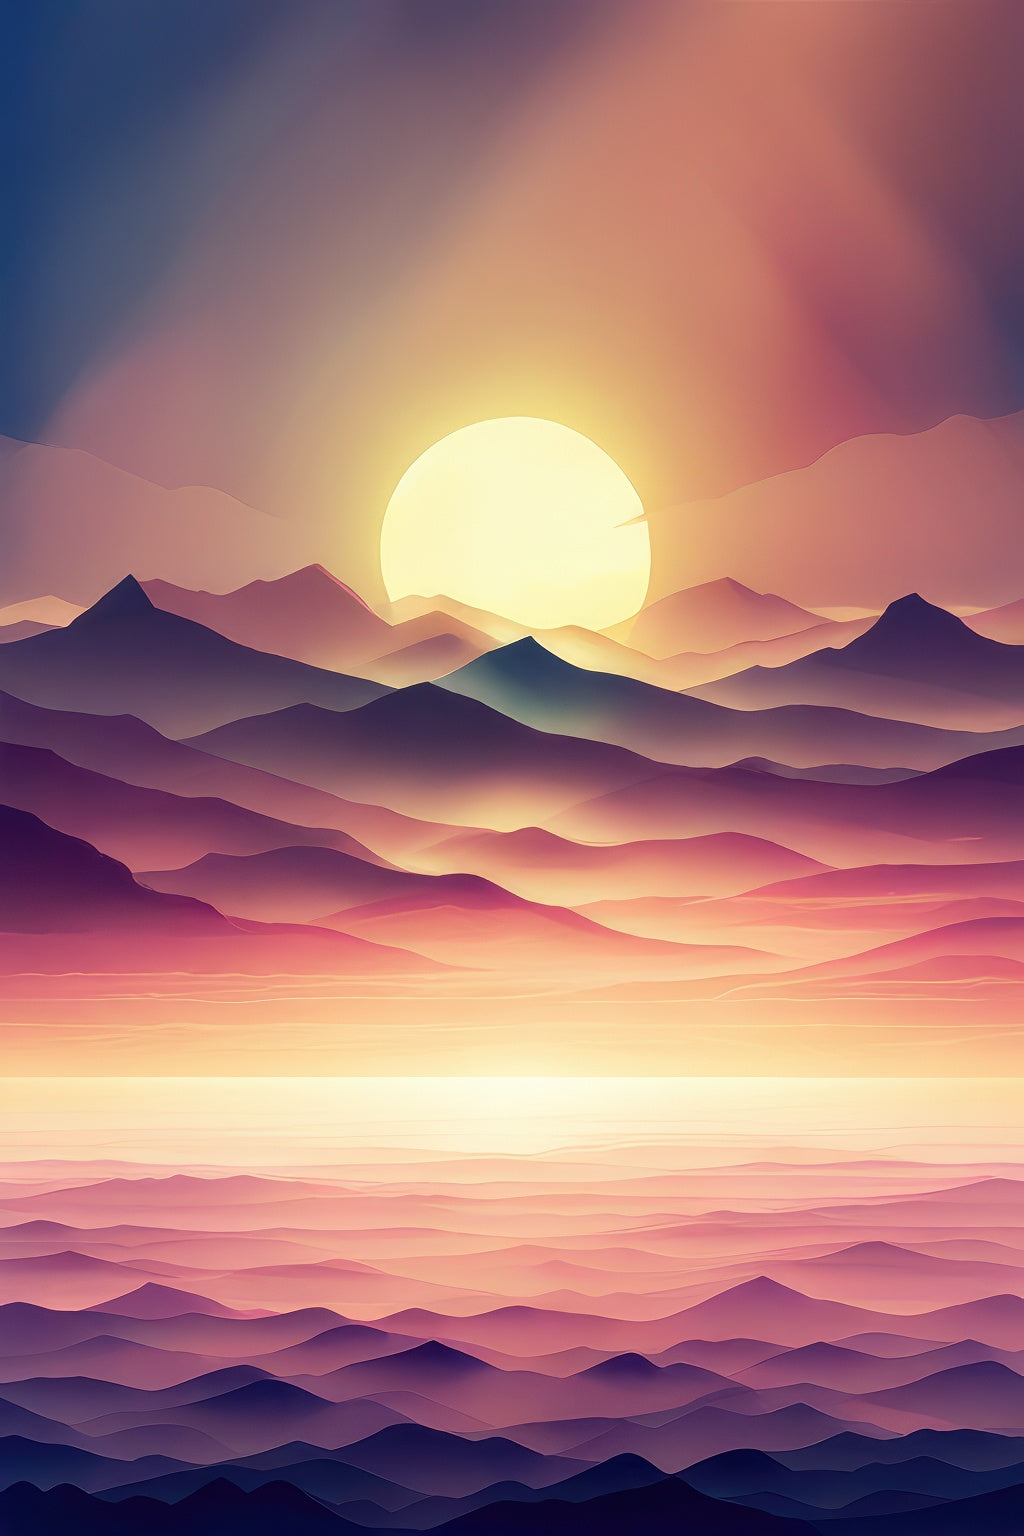 Mountain Range with Sunlit Horizon Digital Illustration I Art Print